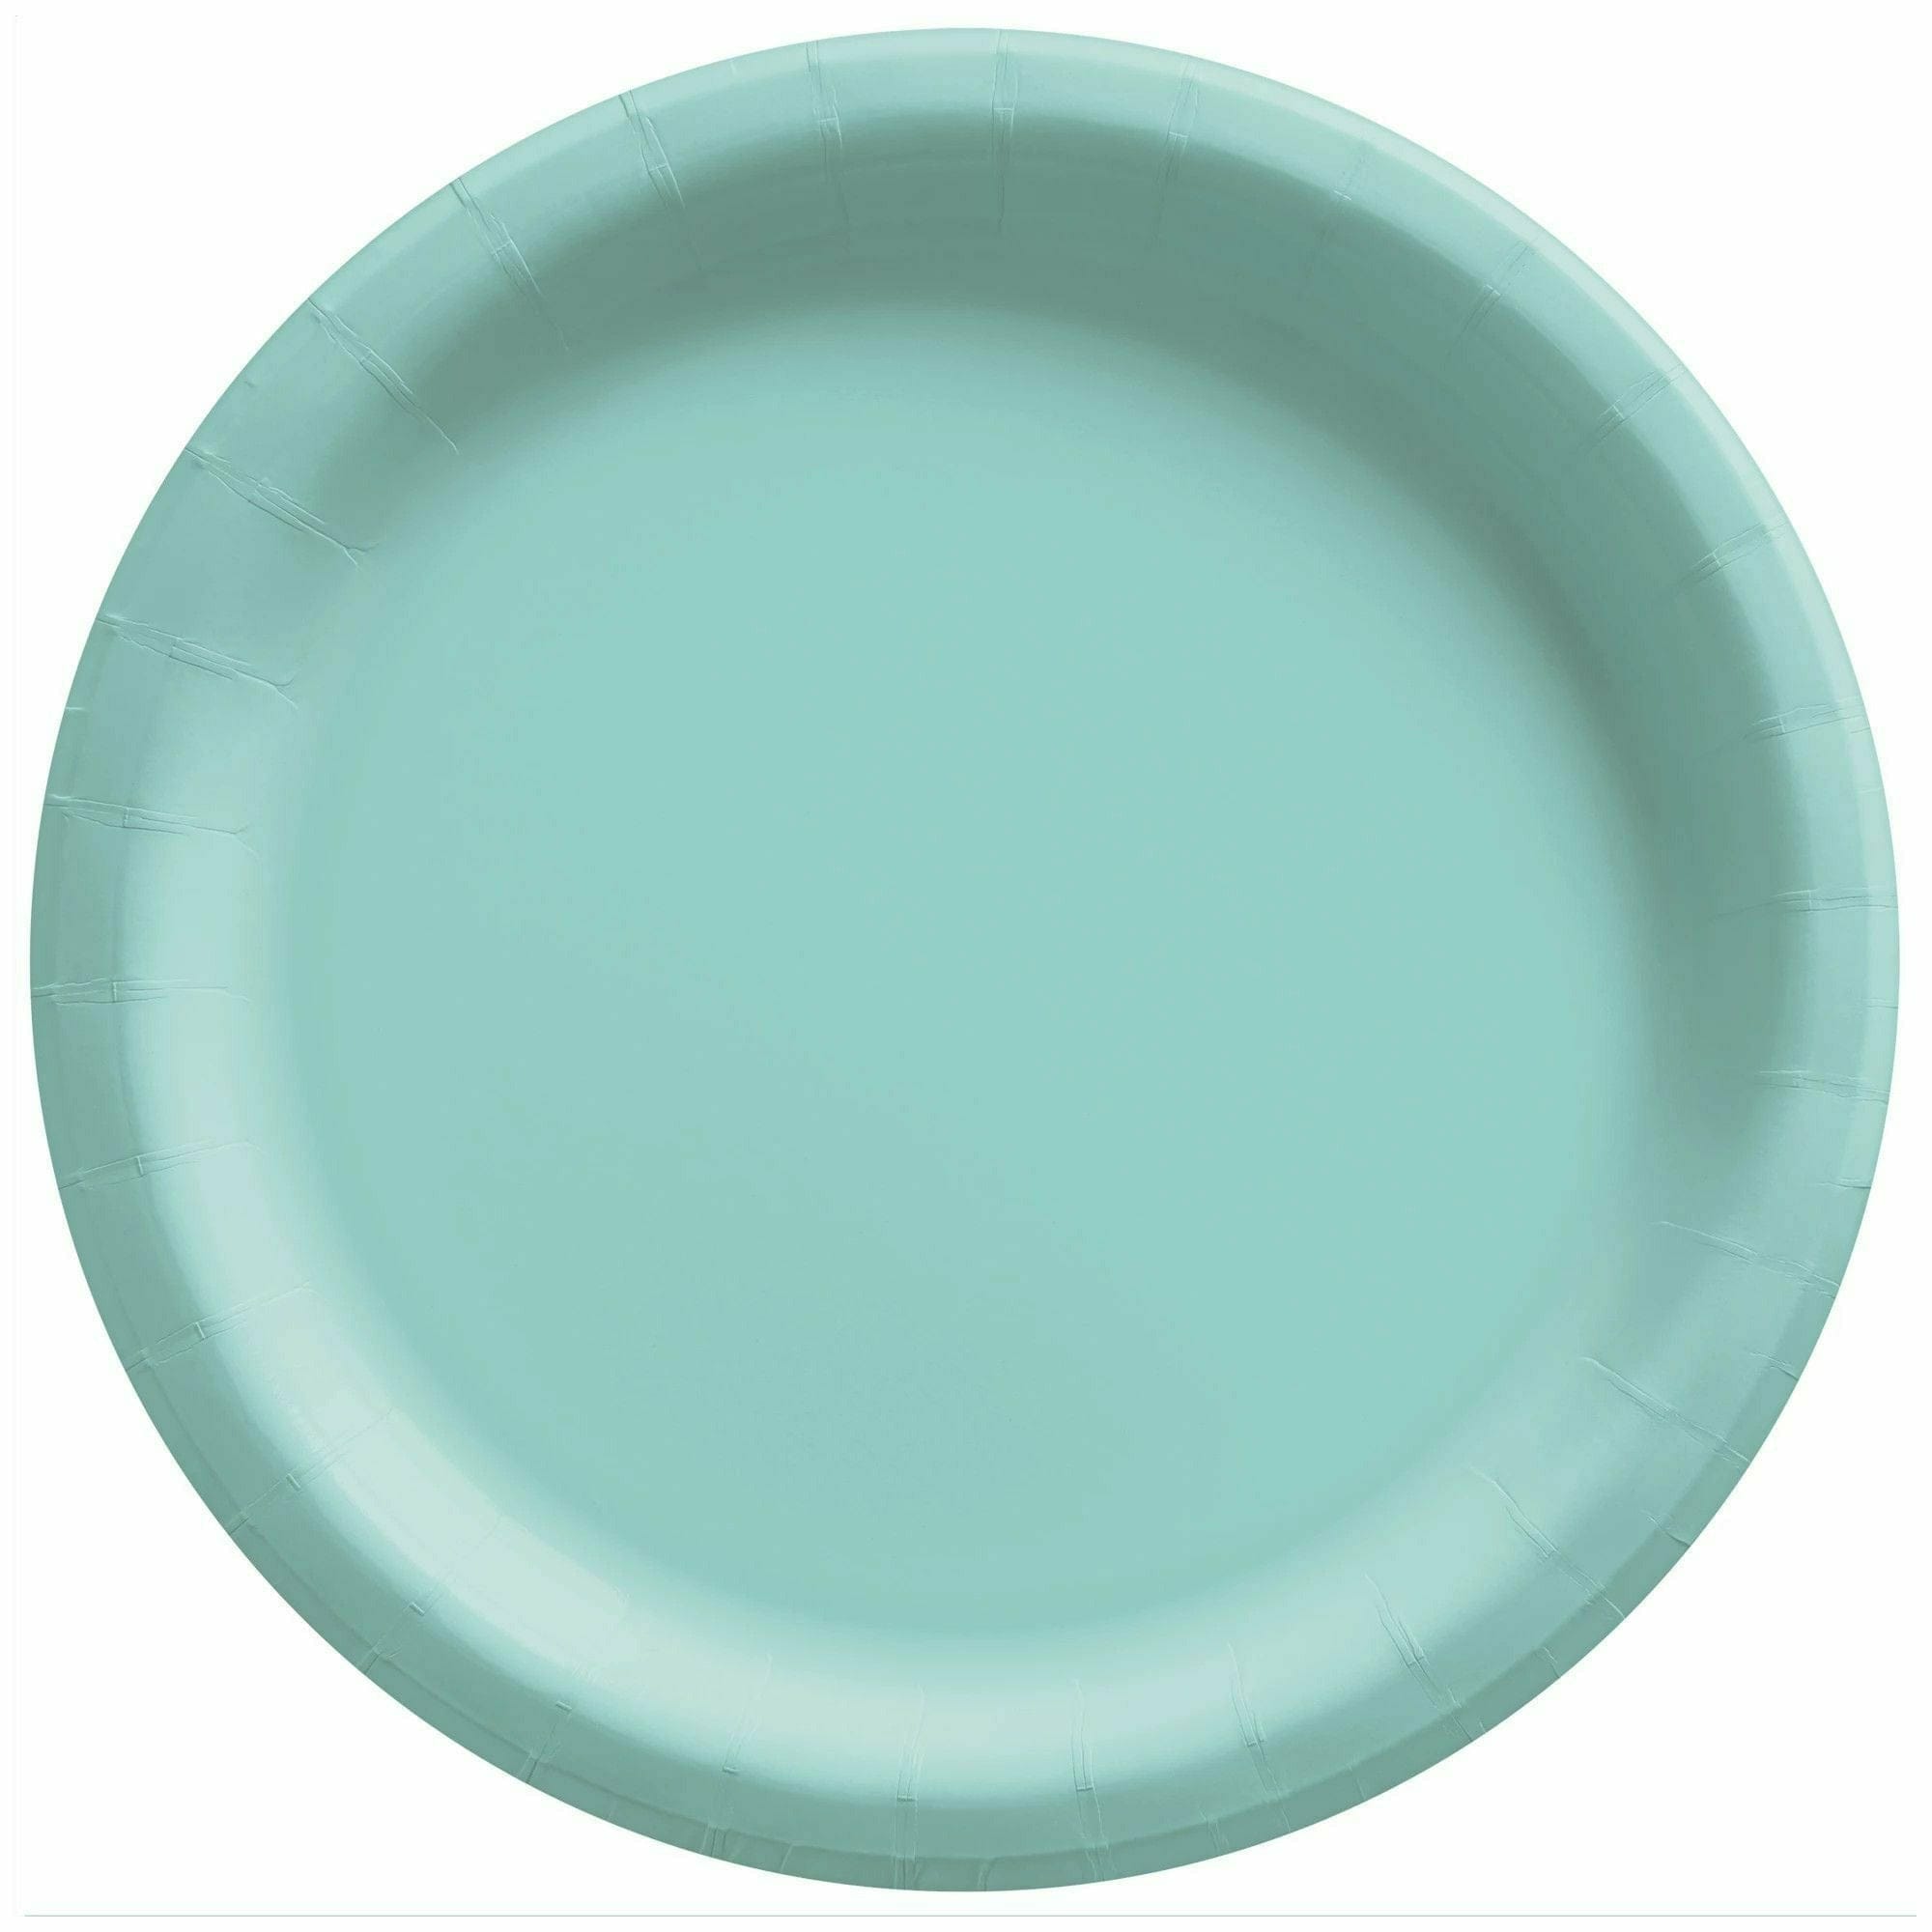 Amscan BASIC Robin's Egg Blue - 10" Round Paper Plates, 50 Ct.